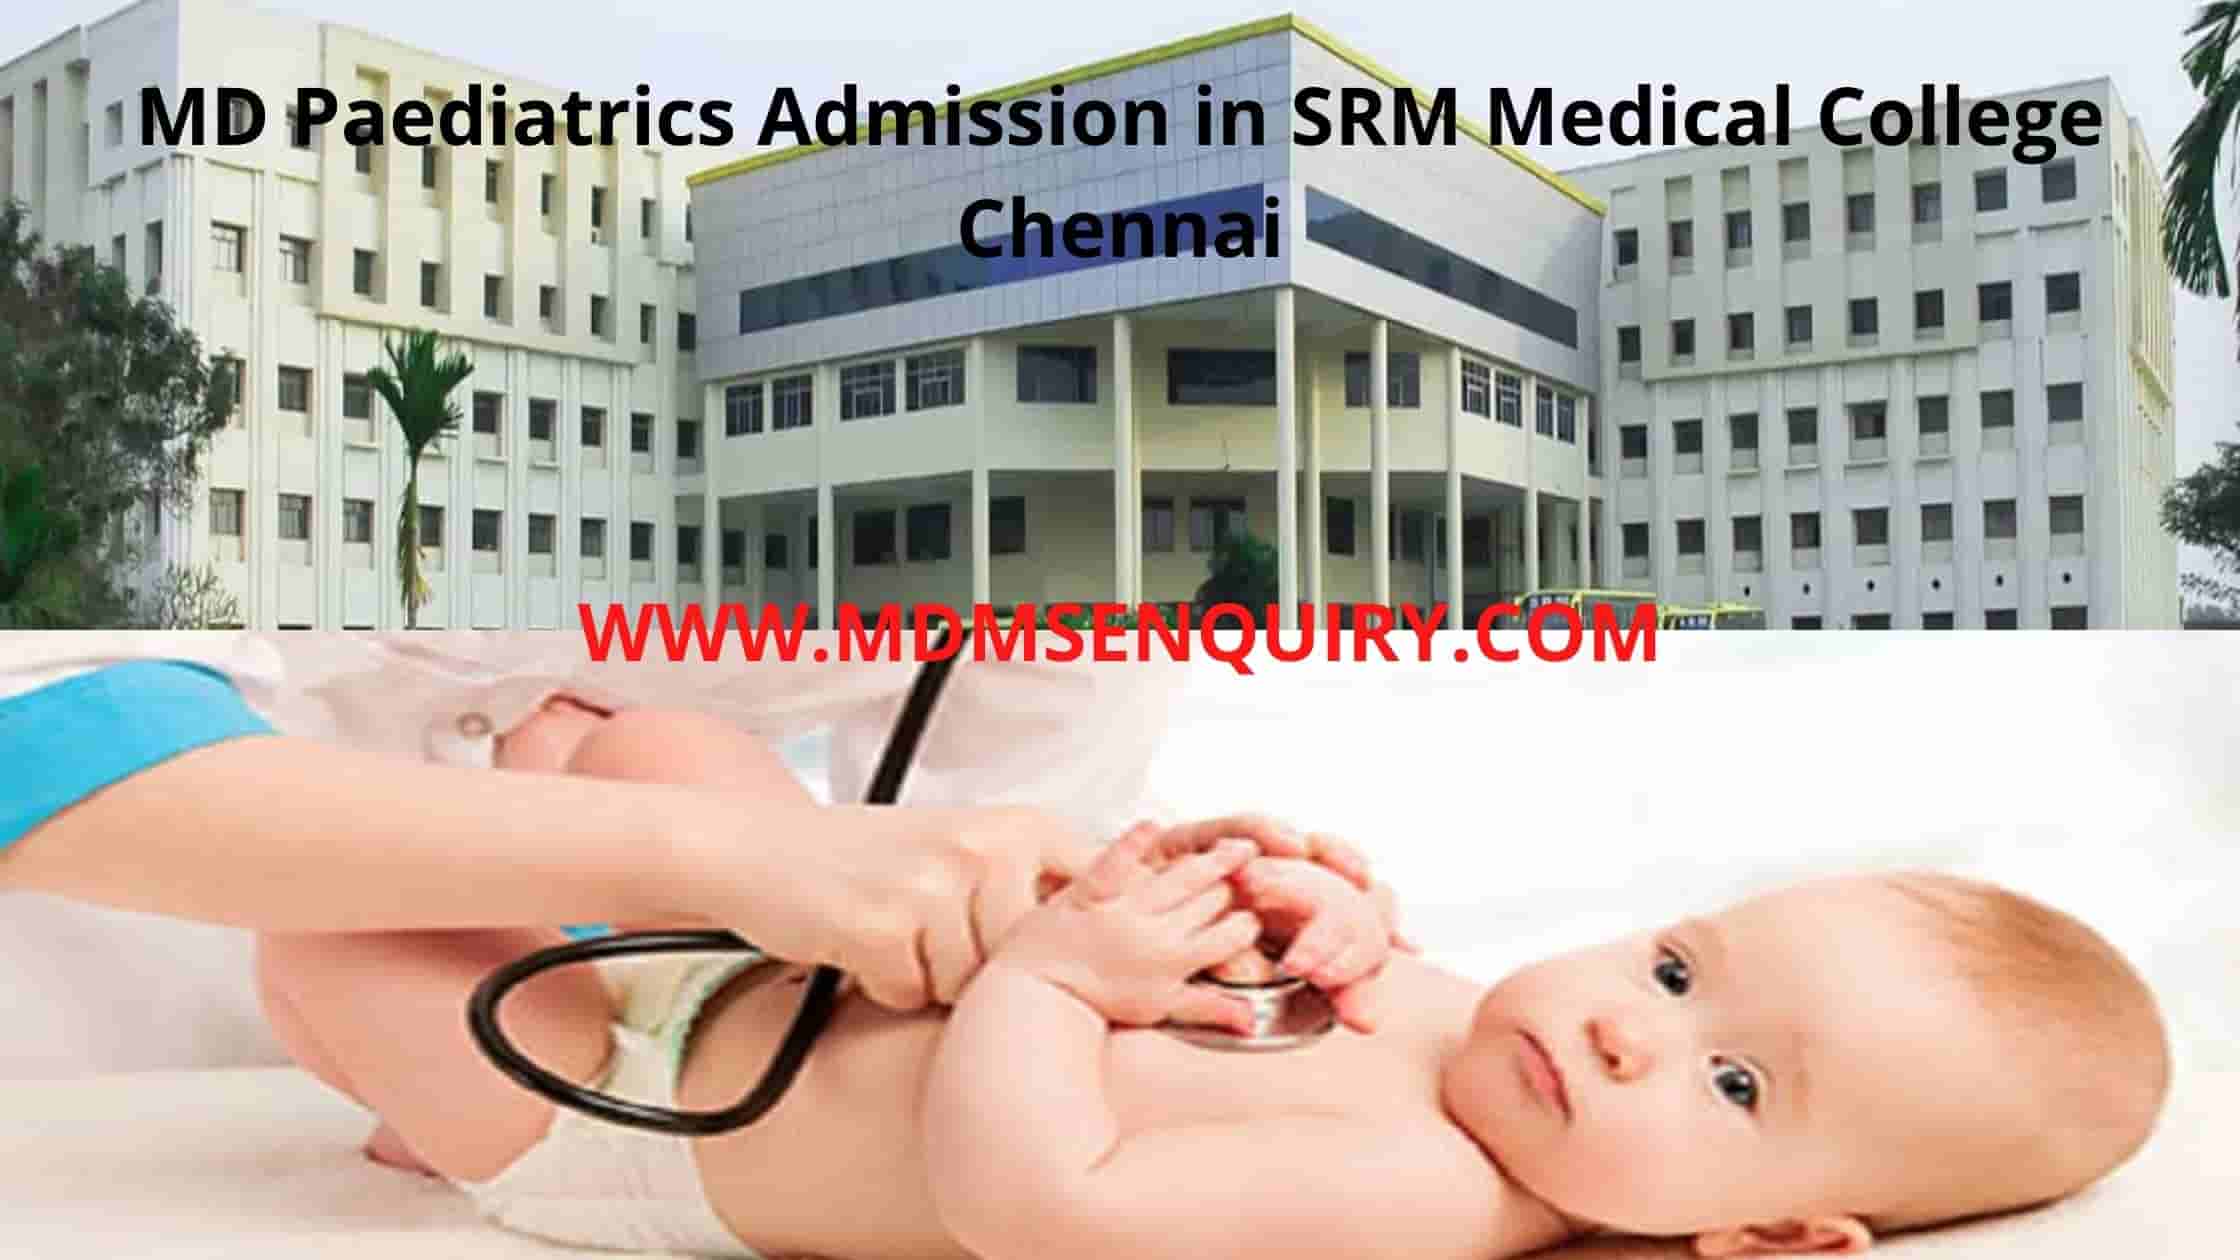 MD Paediatrics admission in SRM Medical College Chennai